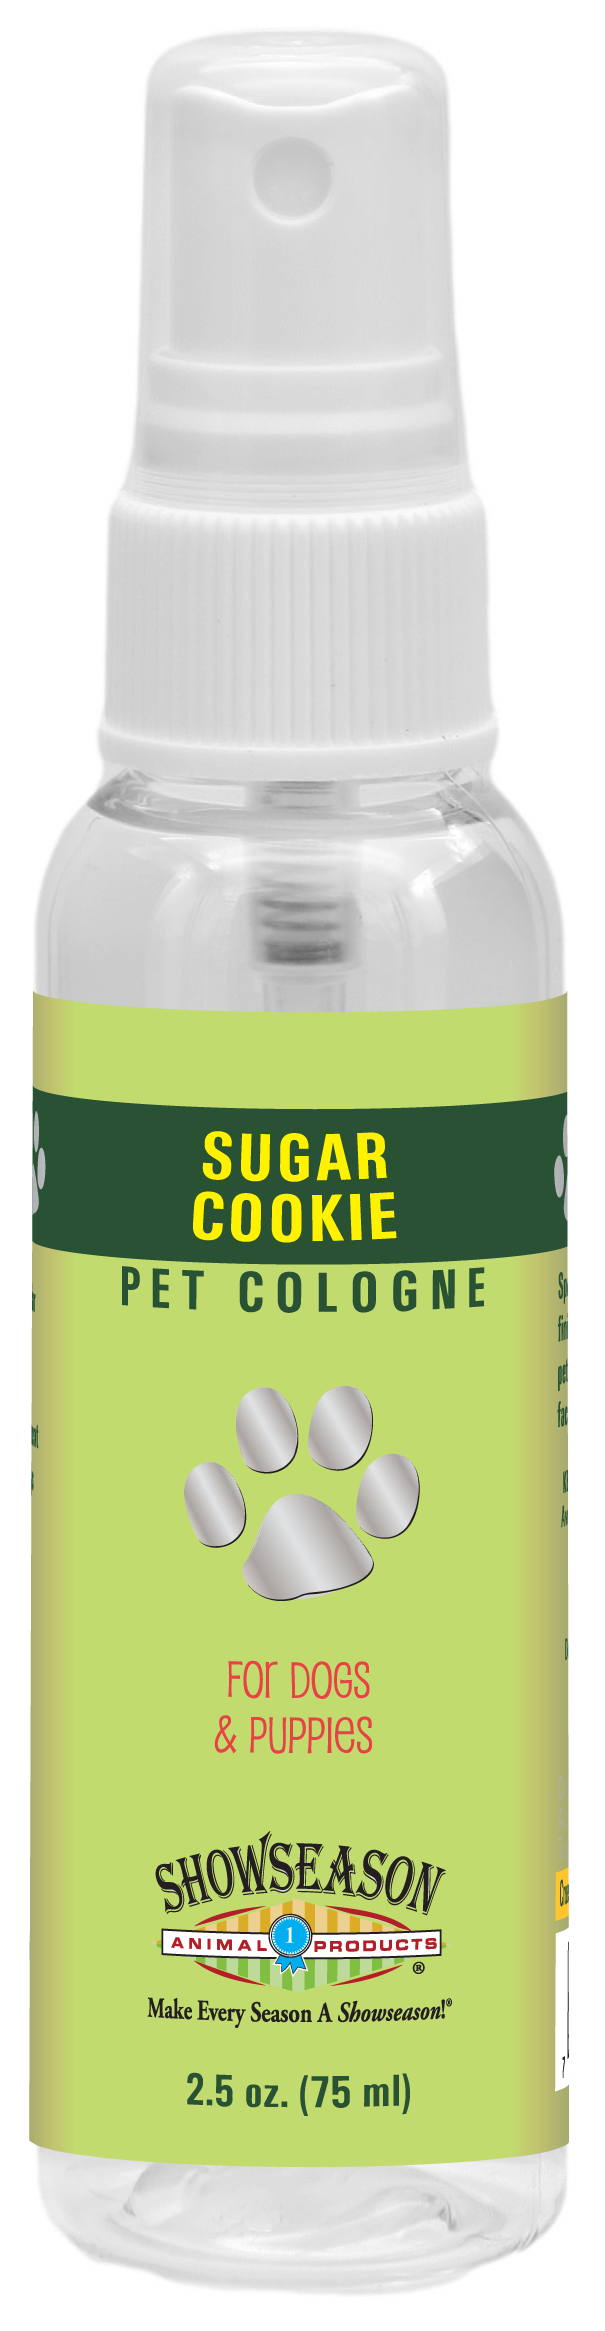 Sugar Cookie Pet Cologne